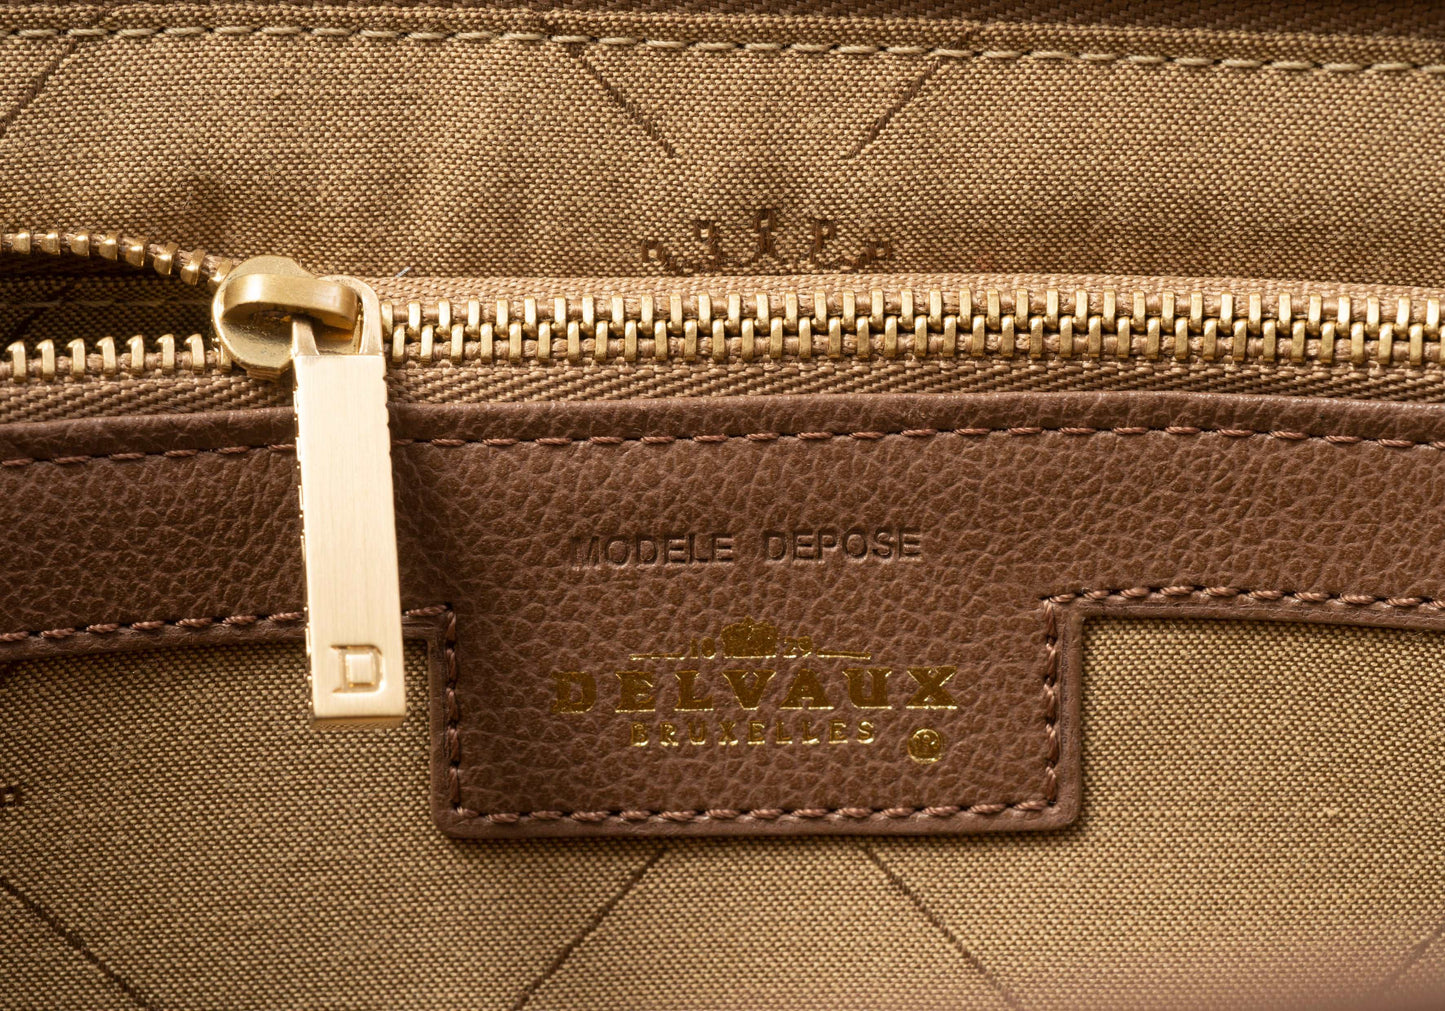 Delvaux George vintage handbag 2004